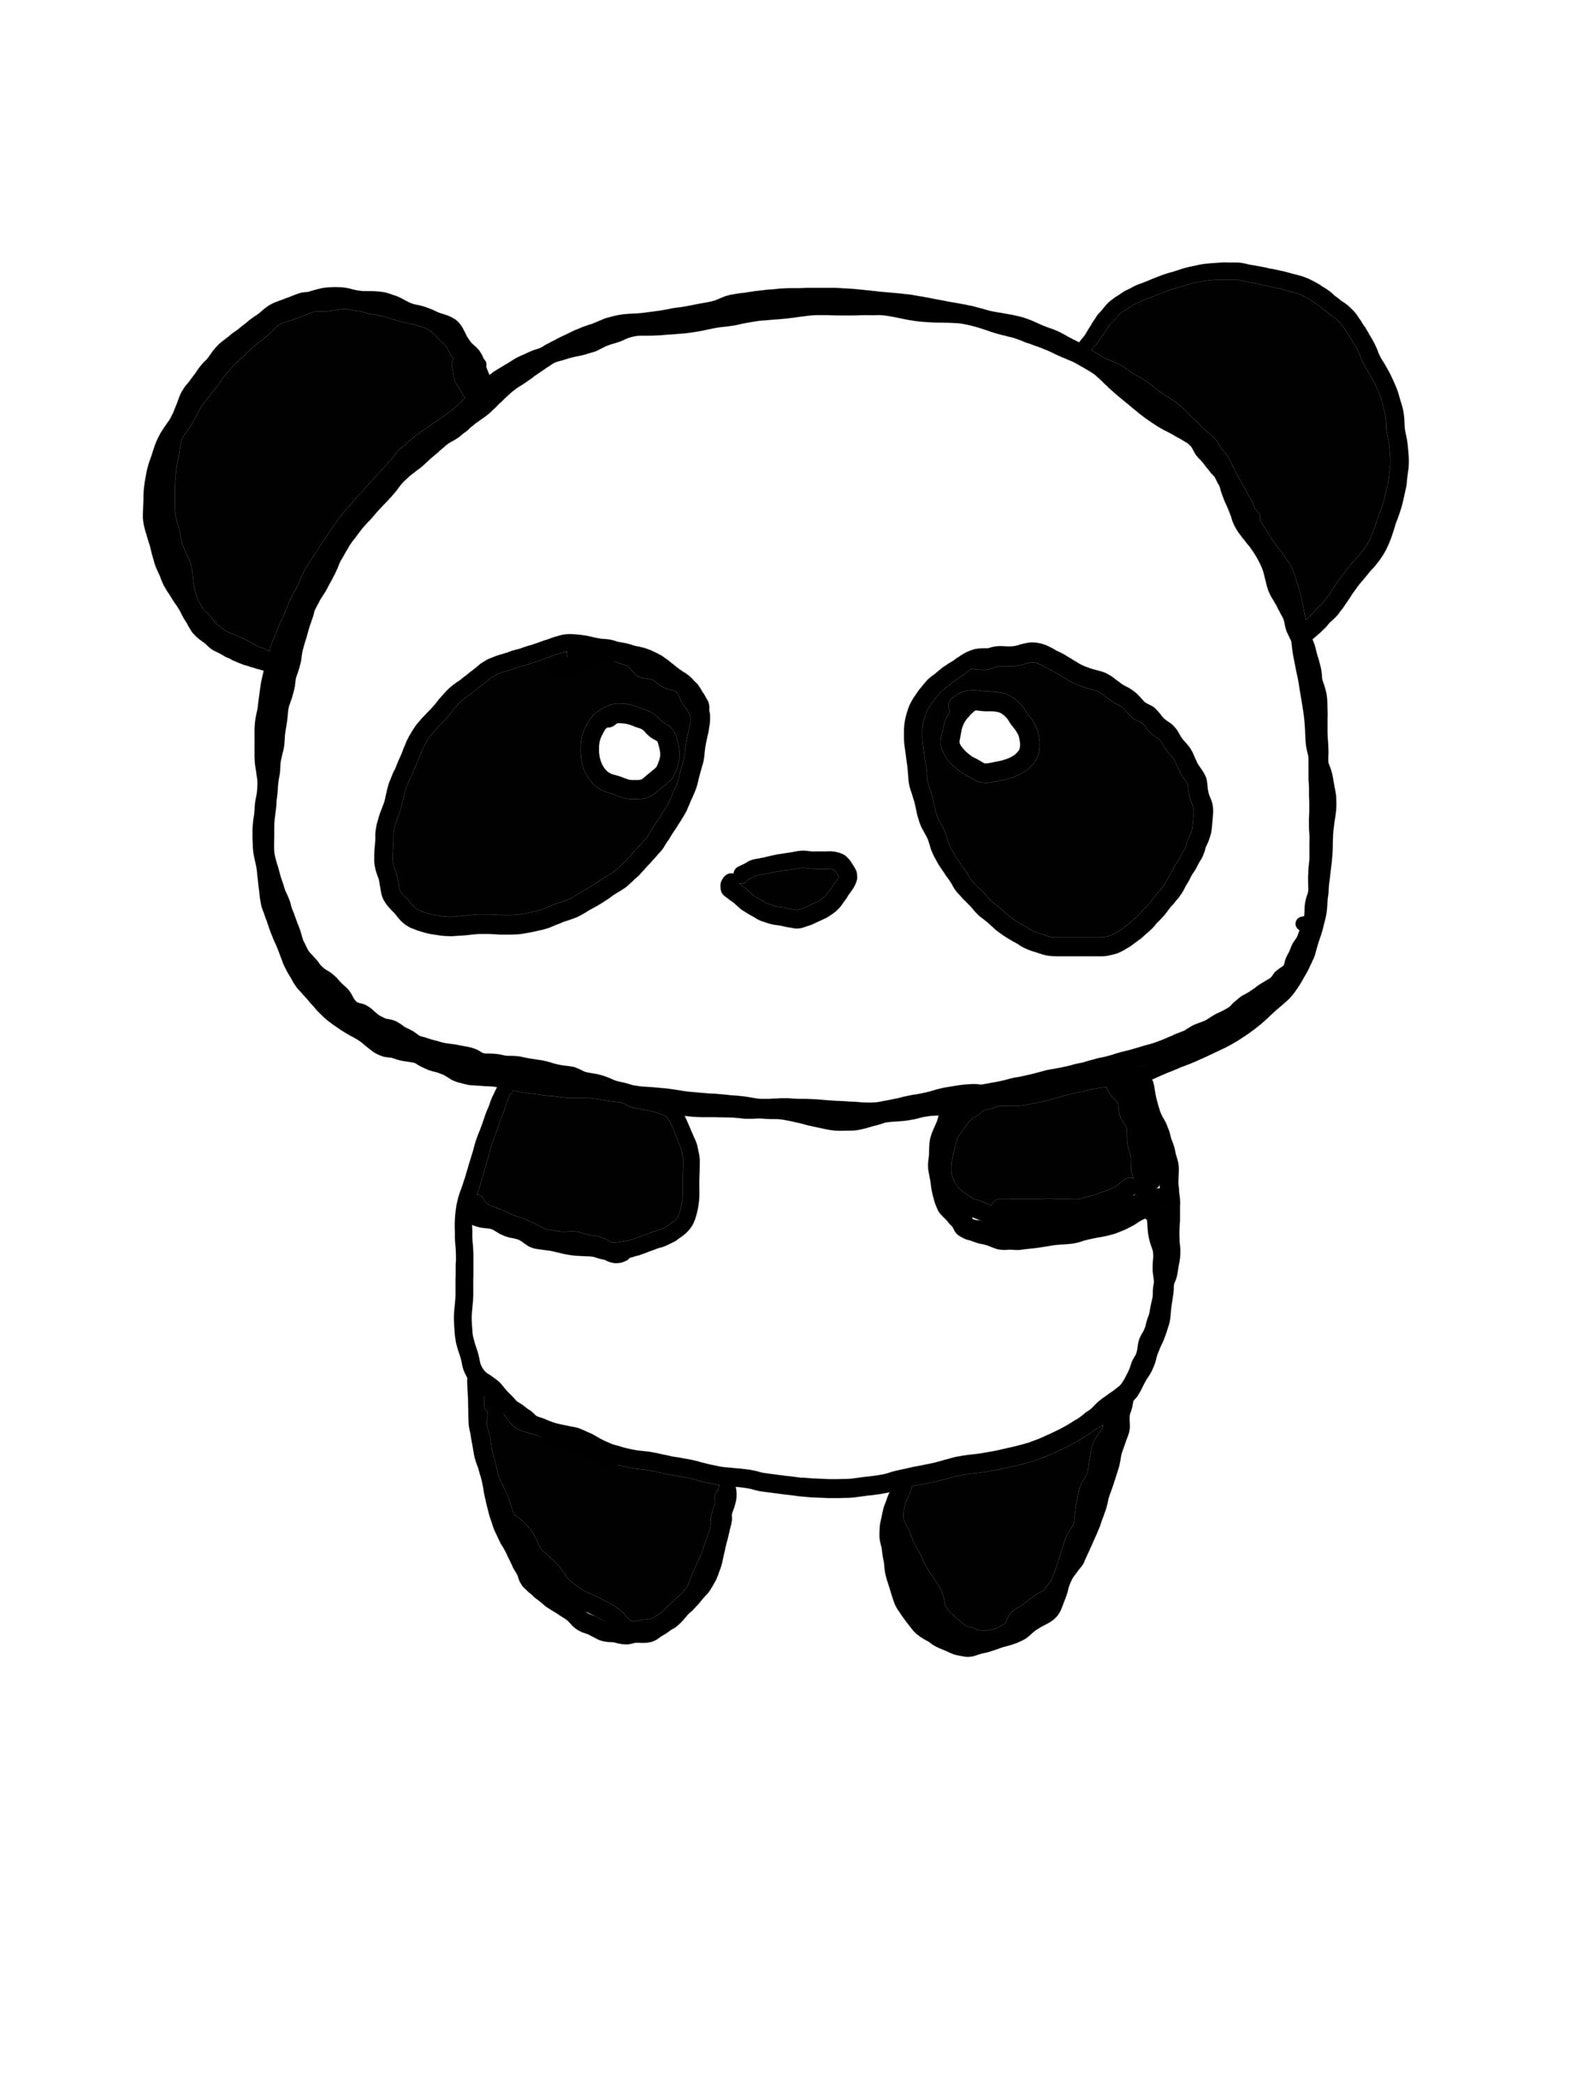 Cute Baby Panda 3 SVG | Etsy